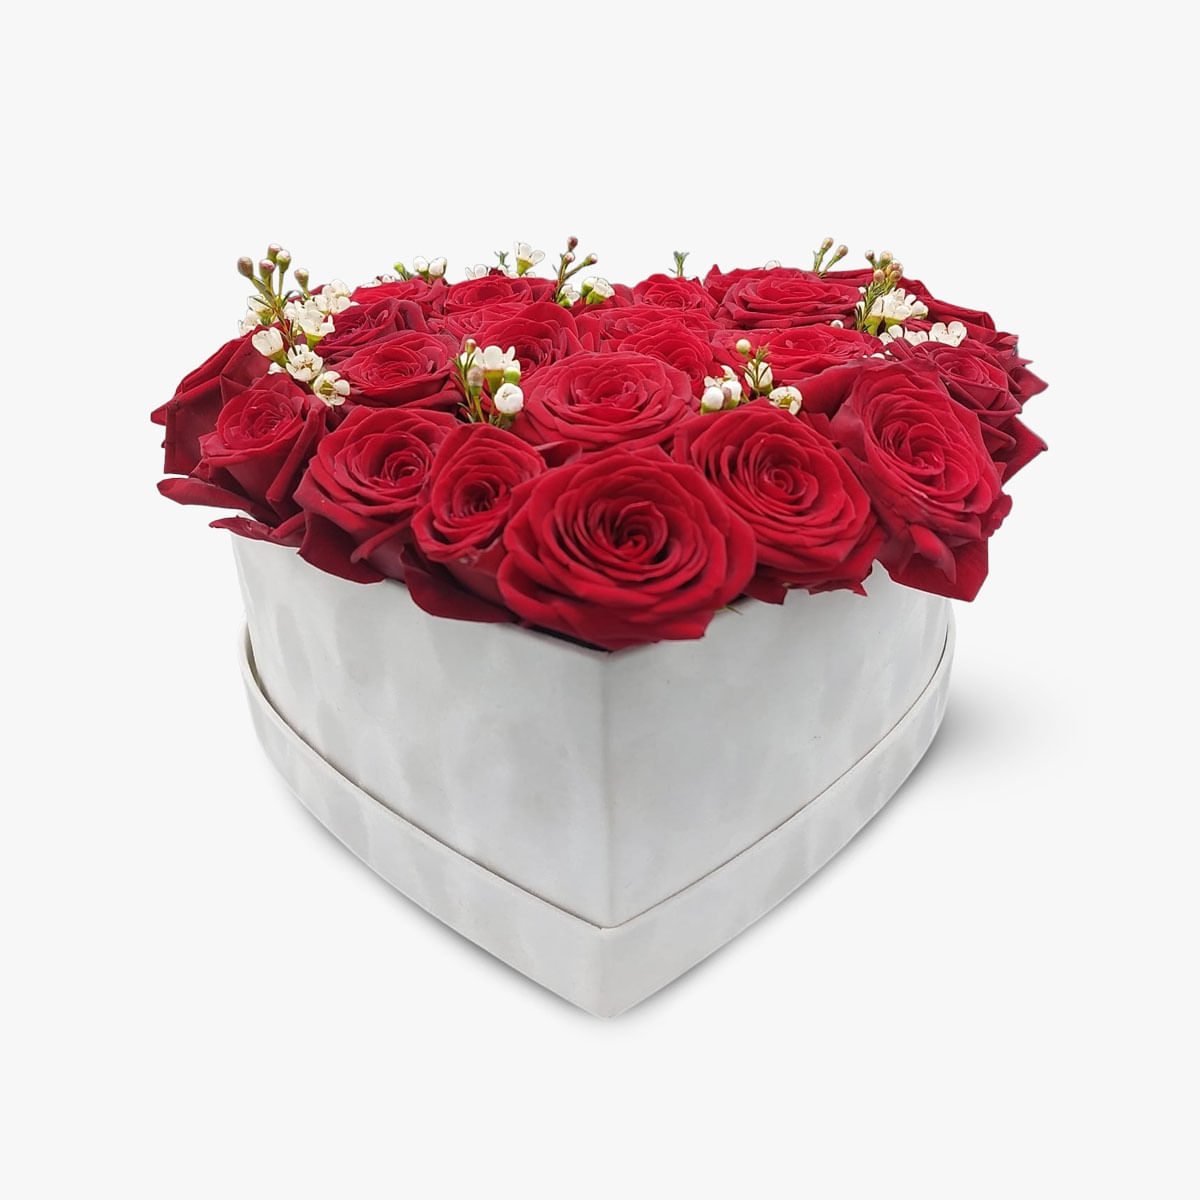 Aranjament inima cu trandafiri rosii si wax flower pentru ocazii unice